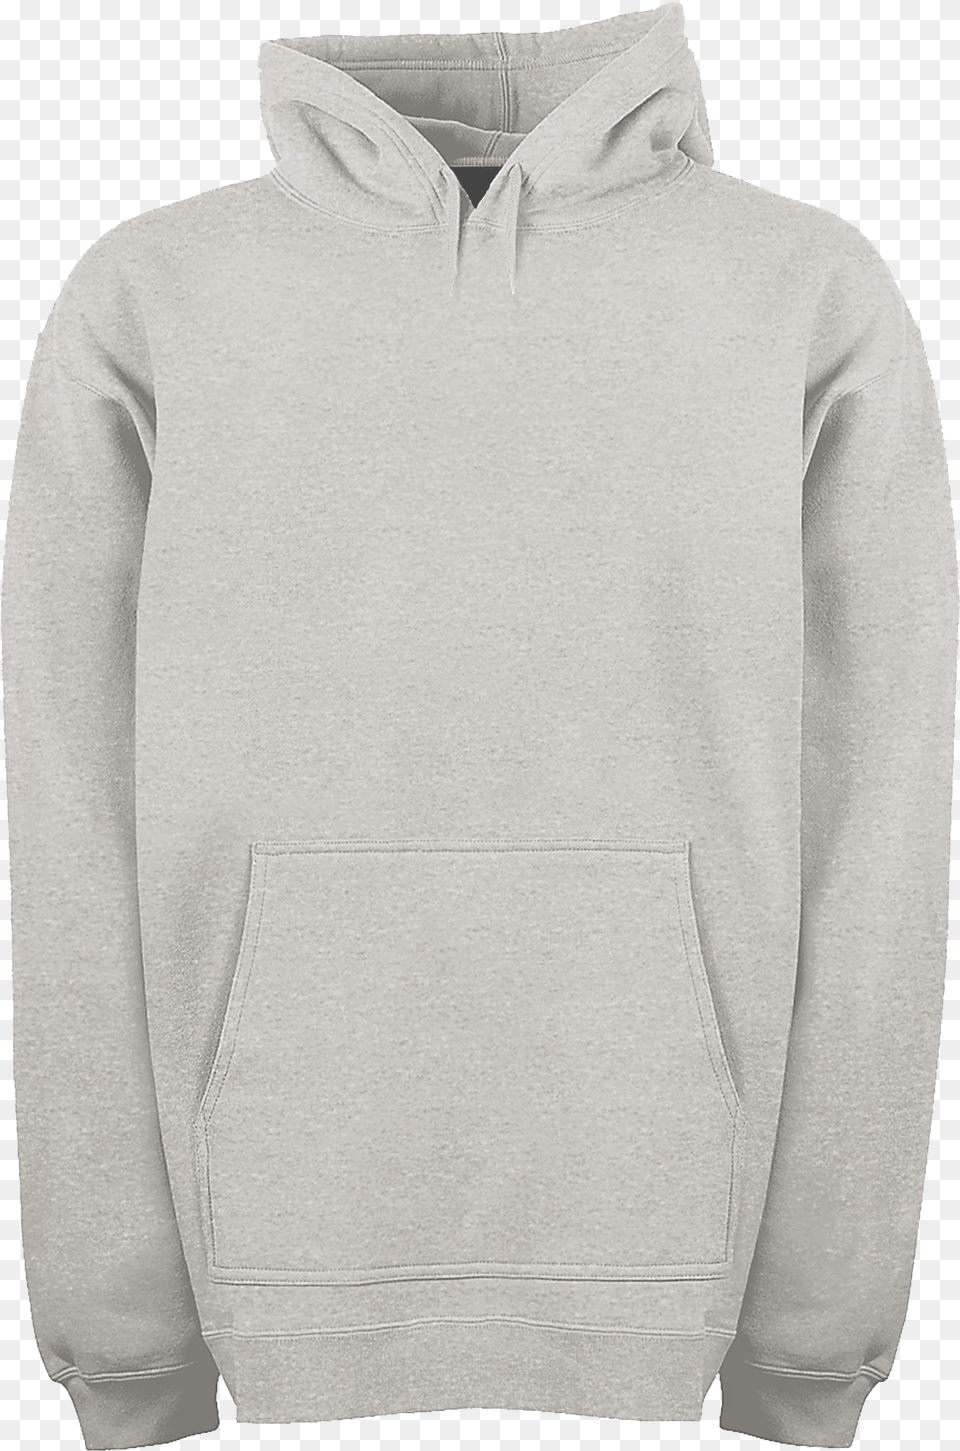 Grey Hoodie Front Templates Station Gildan Unisex Hooded Sweatshirt, Clothing, Knitwear, Sweater, Hood Free Png